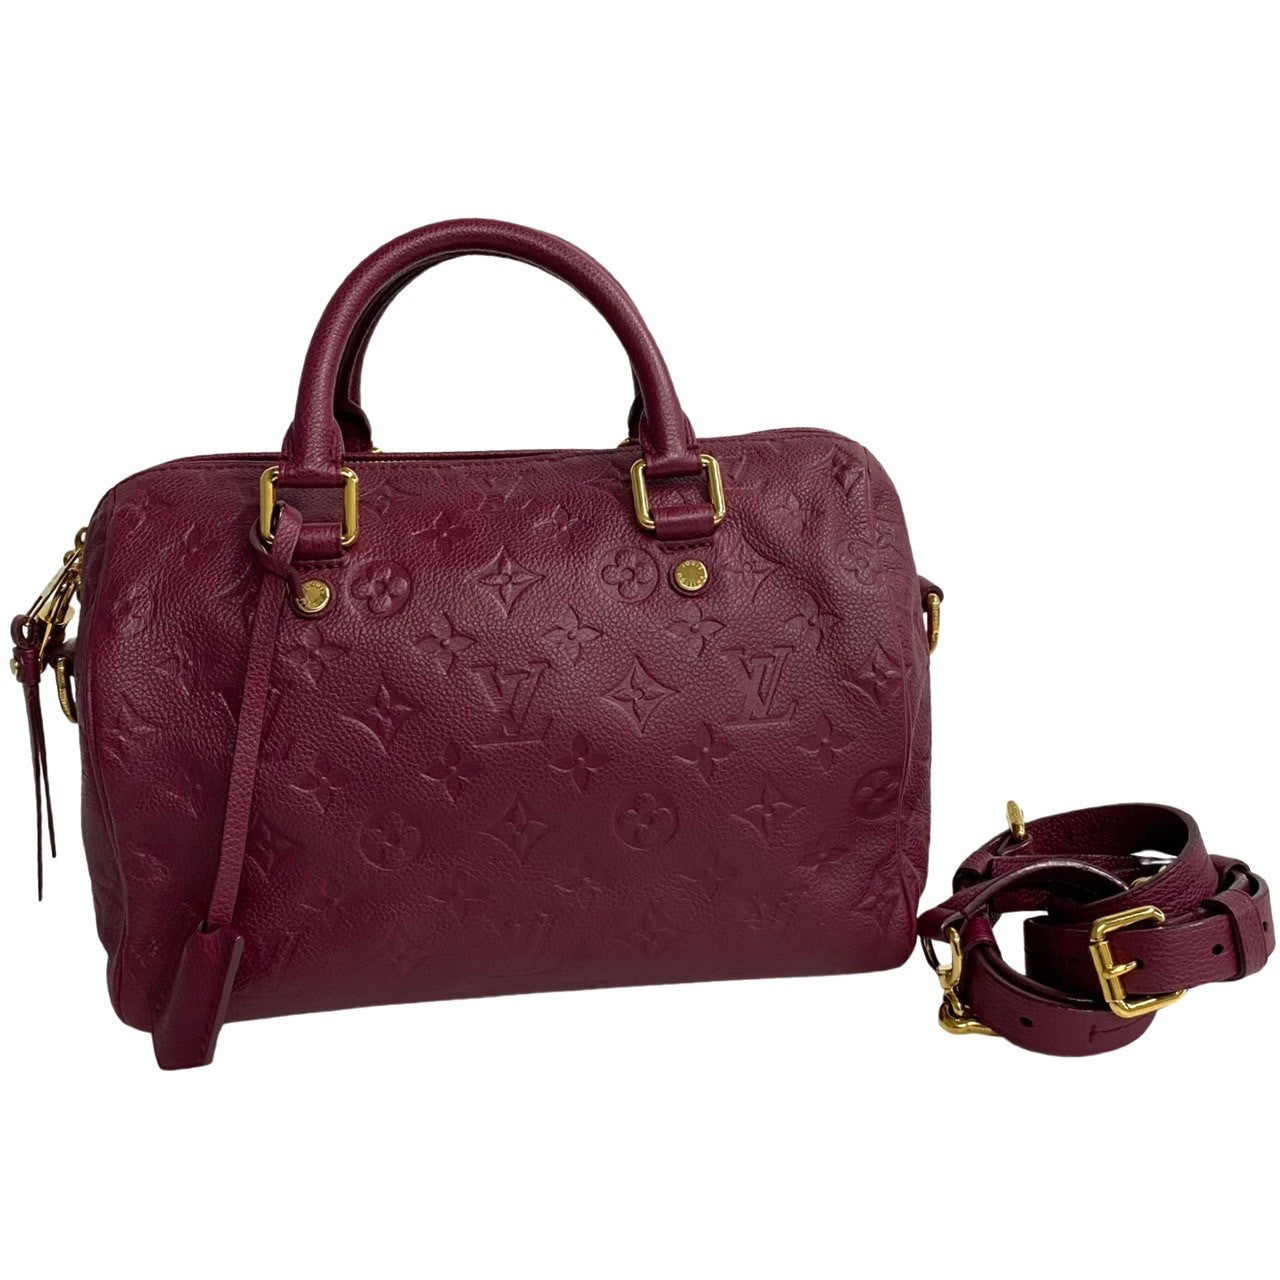 Louis Vuitton Speedy Bandouliere 25 Leather Handbag M40765 in Good condition